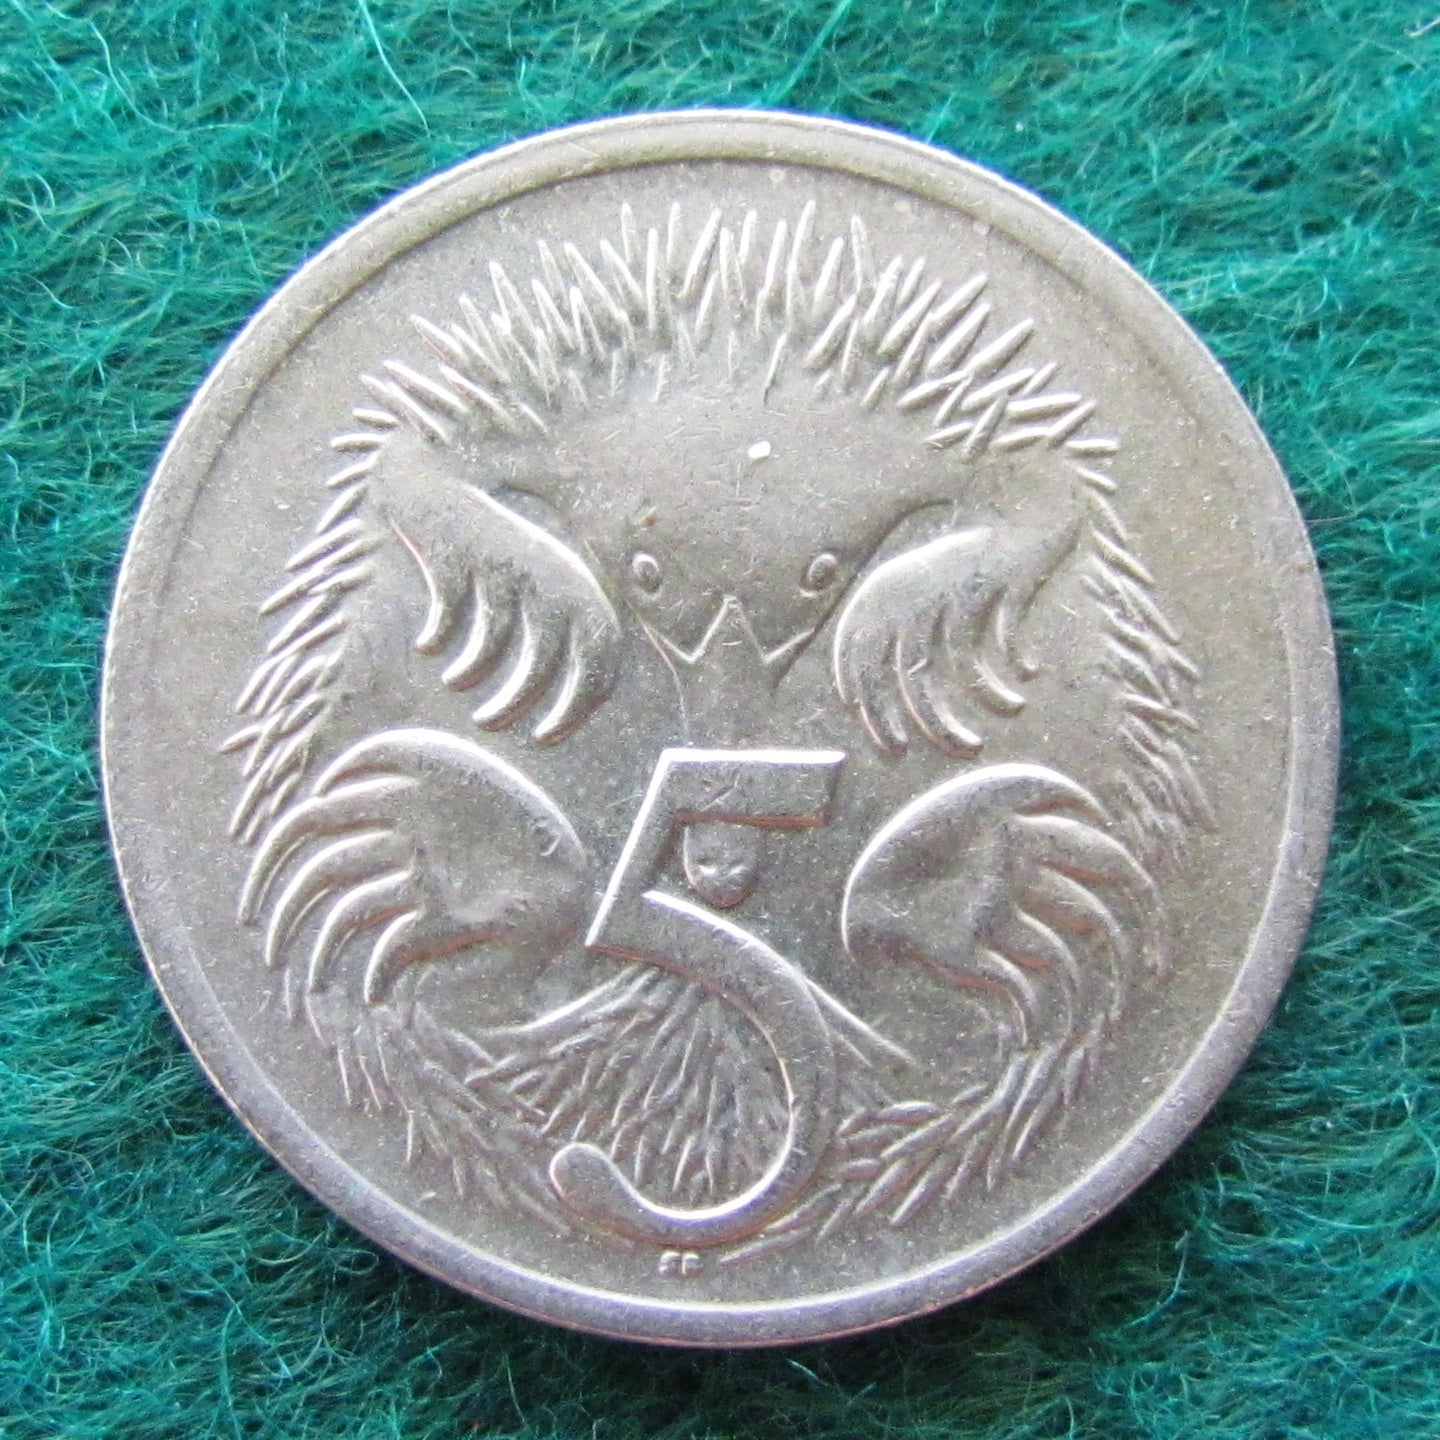 Australian 1972 5 Cent Queen Elizabeth II Coin - Circulated